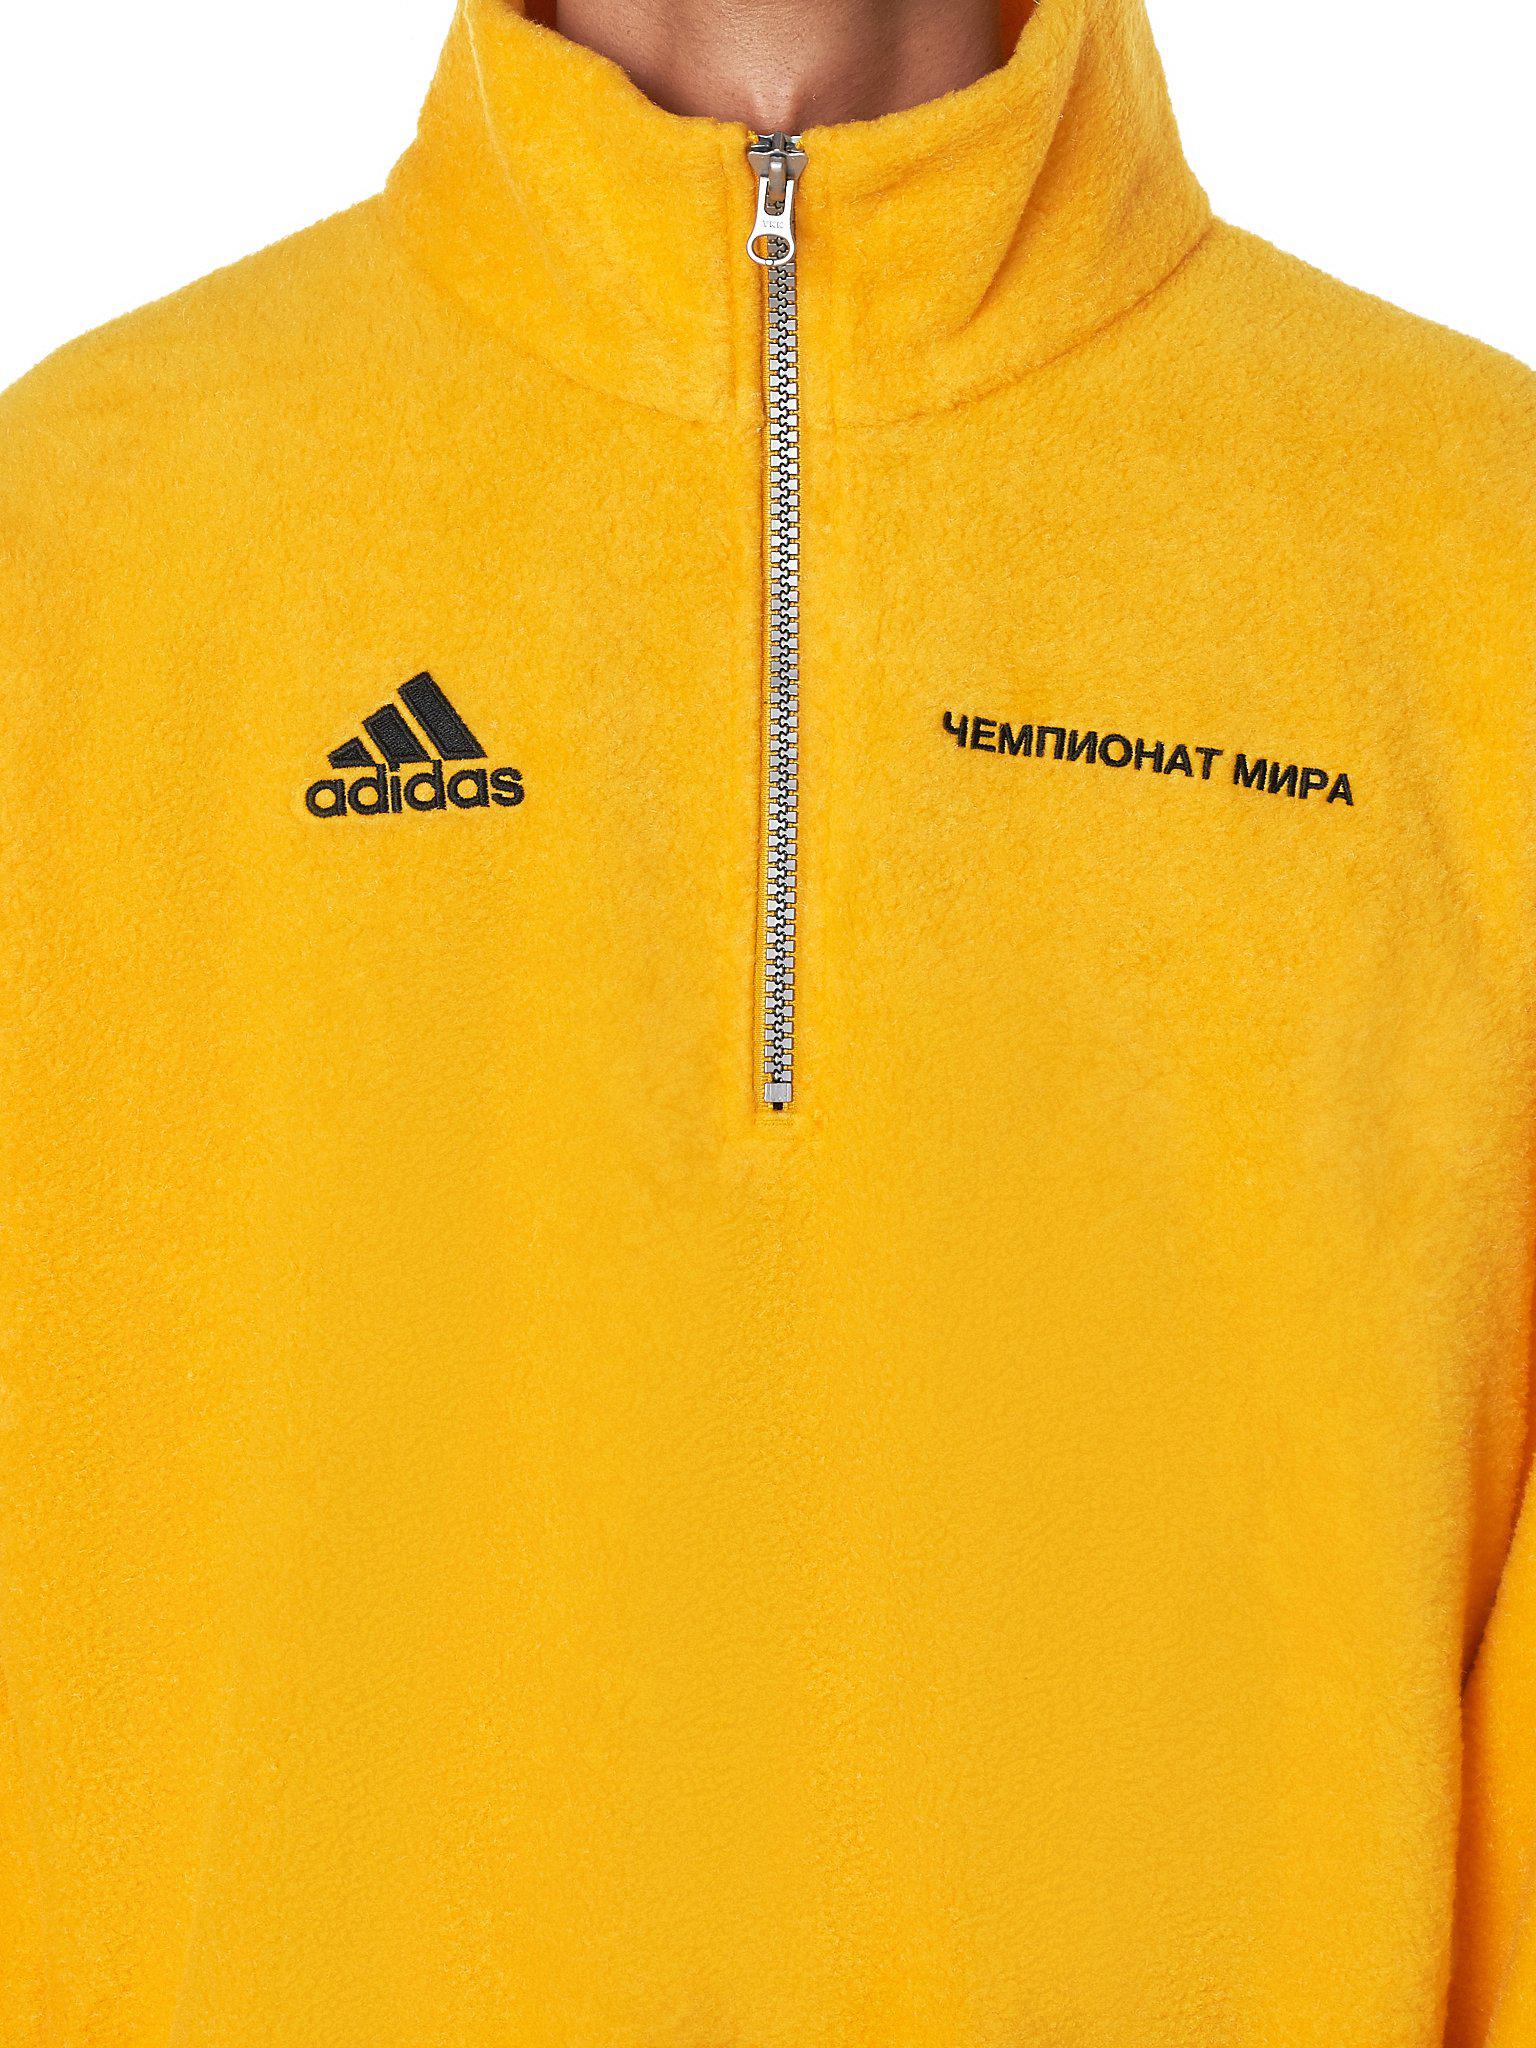 Gosha Rubchinskiy Synthetic Polarfleece Half-zip Pullover in Yellow for Men  - Lyst